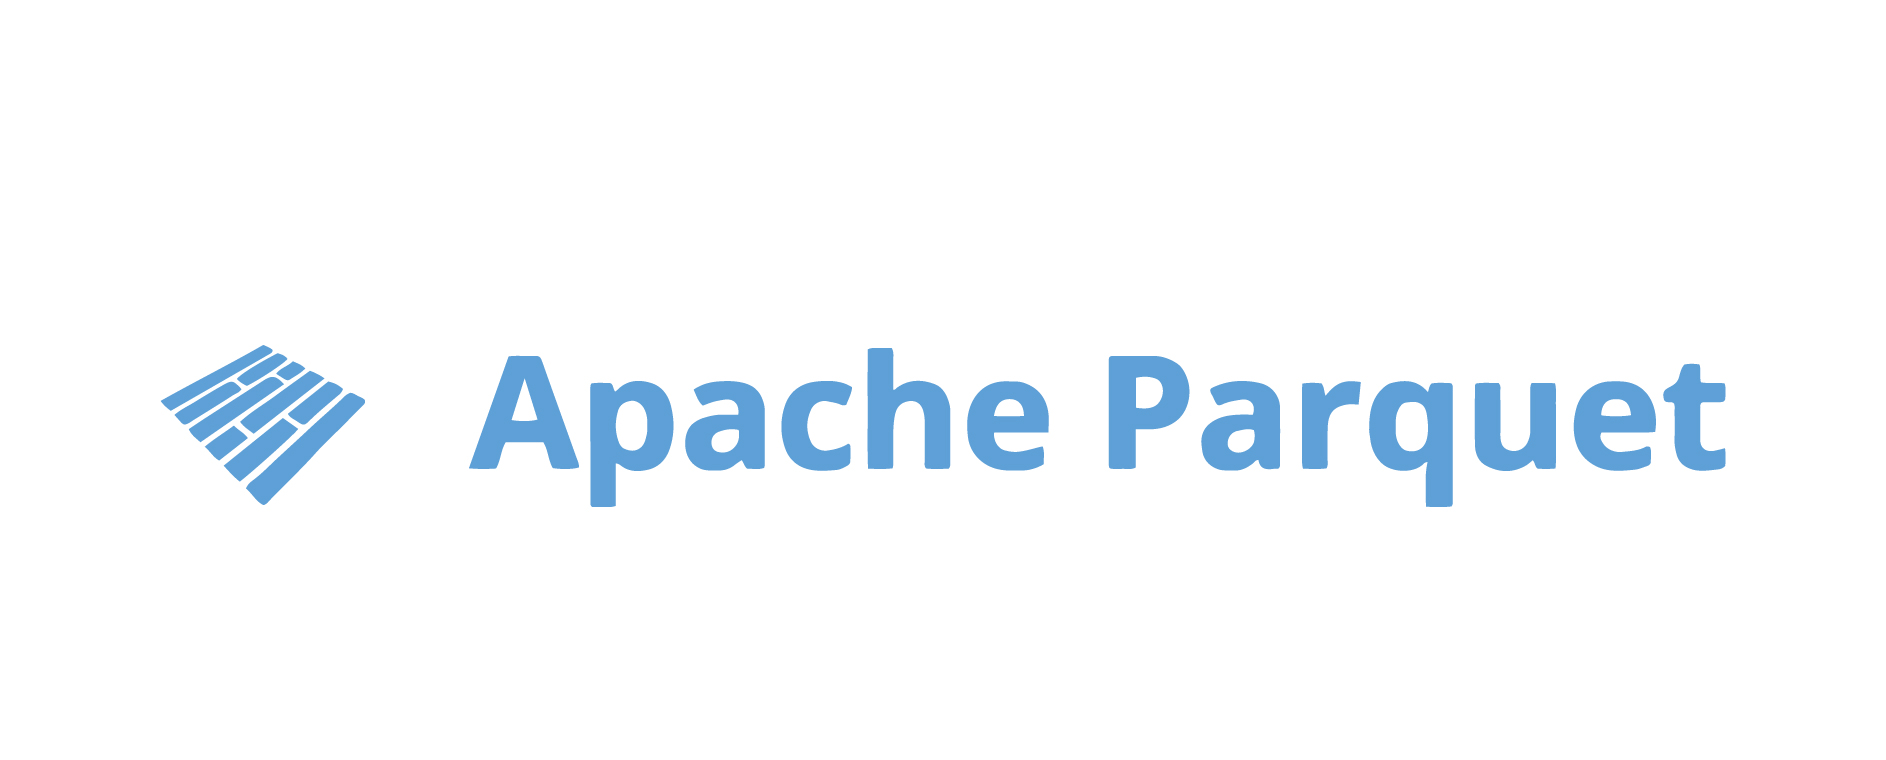 Apache Parquet